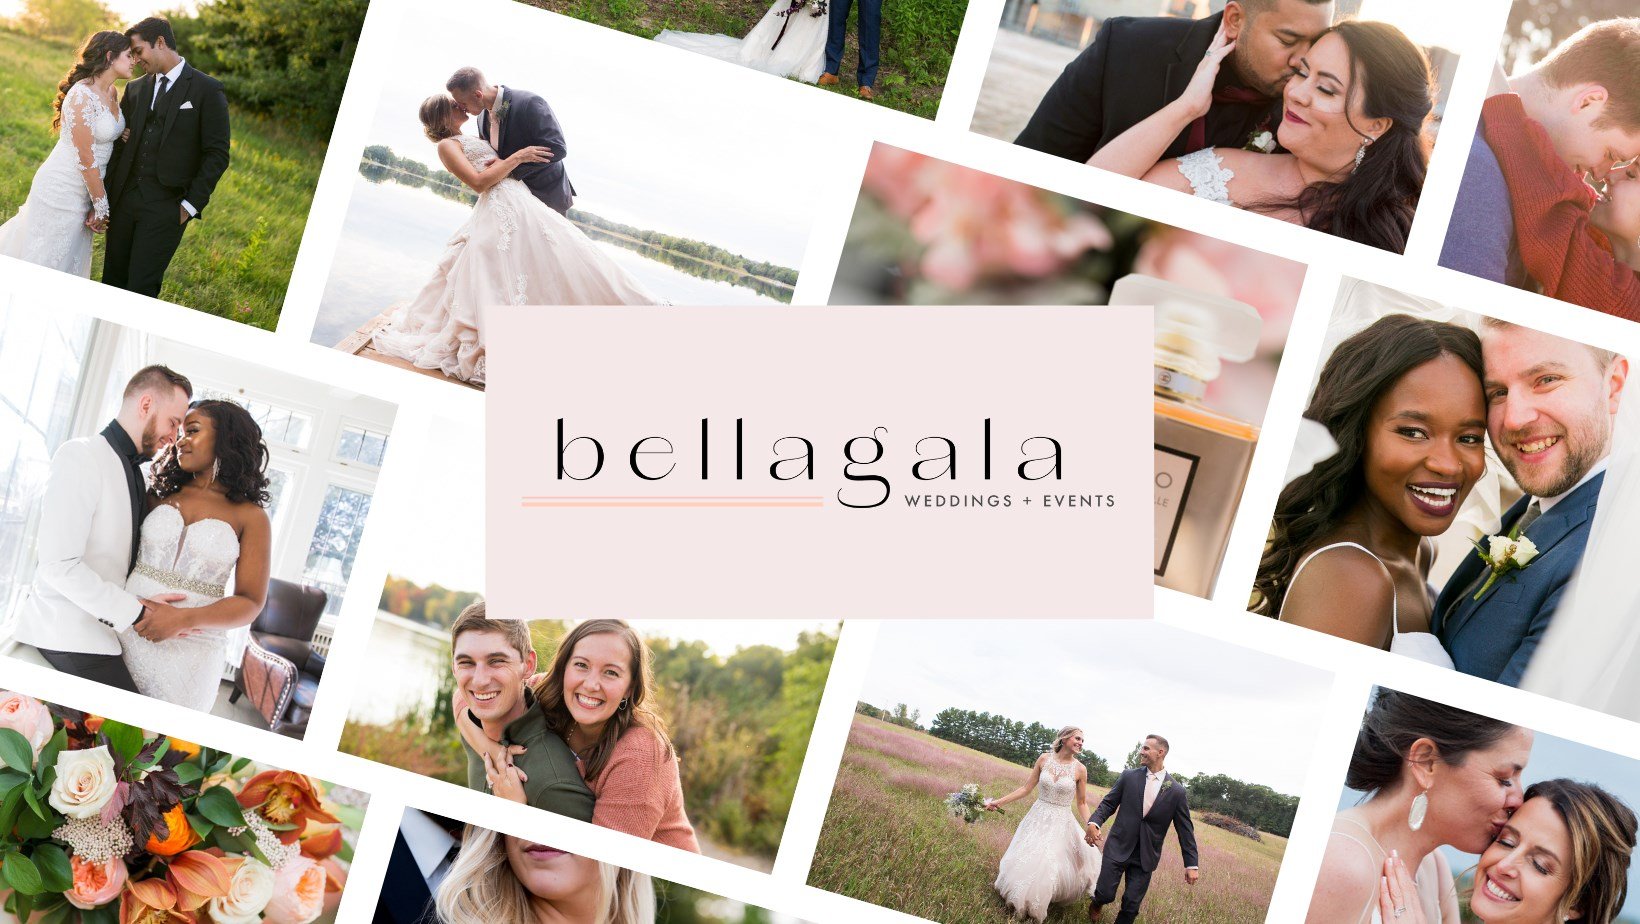 Bellagala